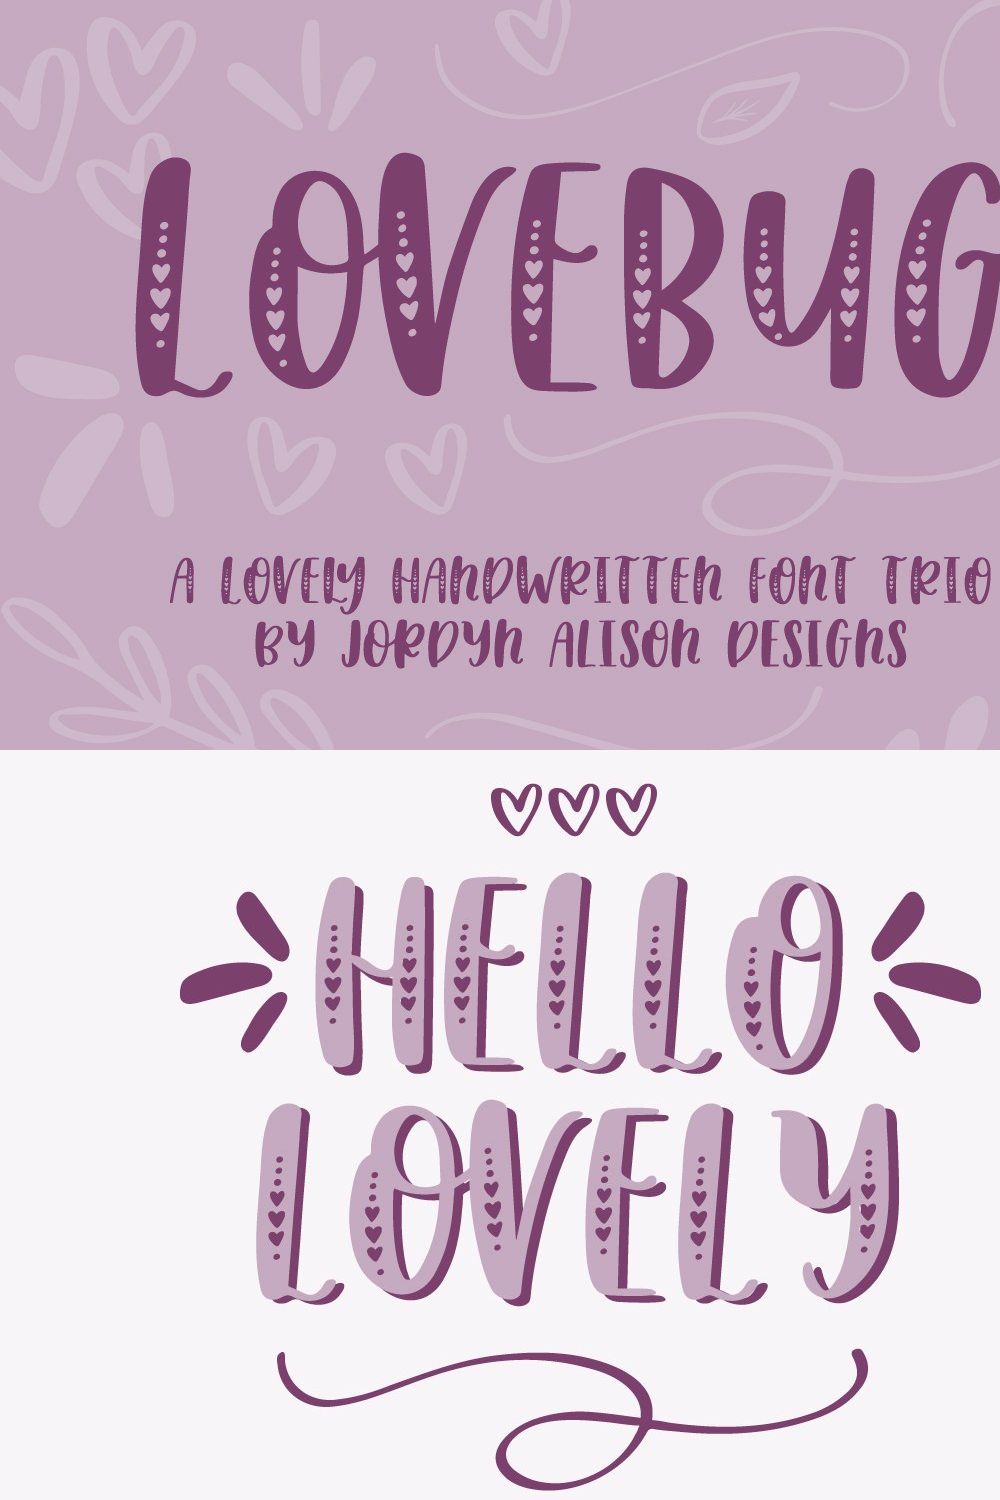 Lovebug Hearts Font Trio pinterest preview image.